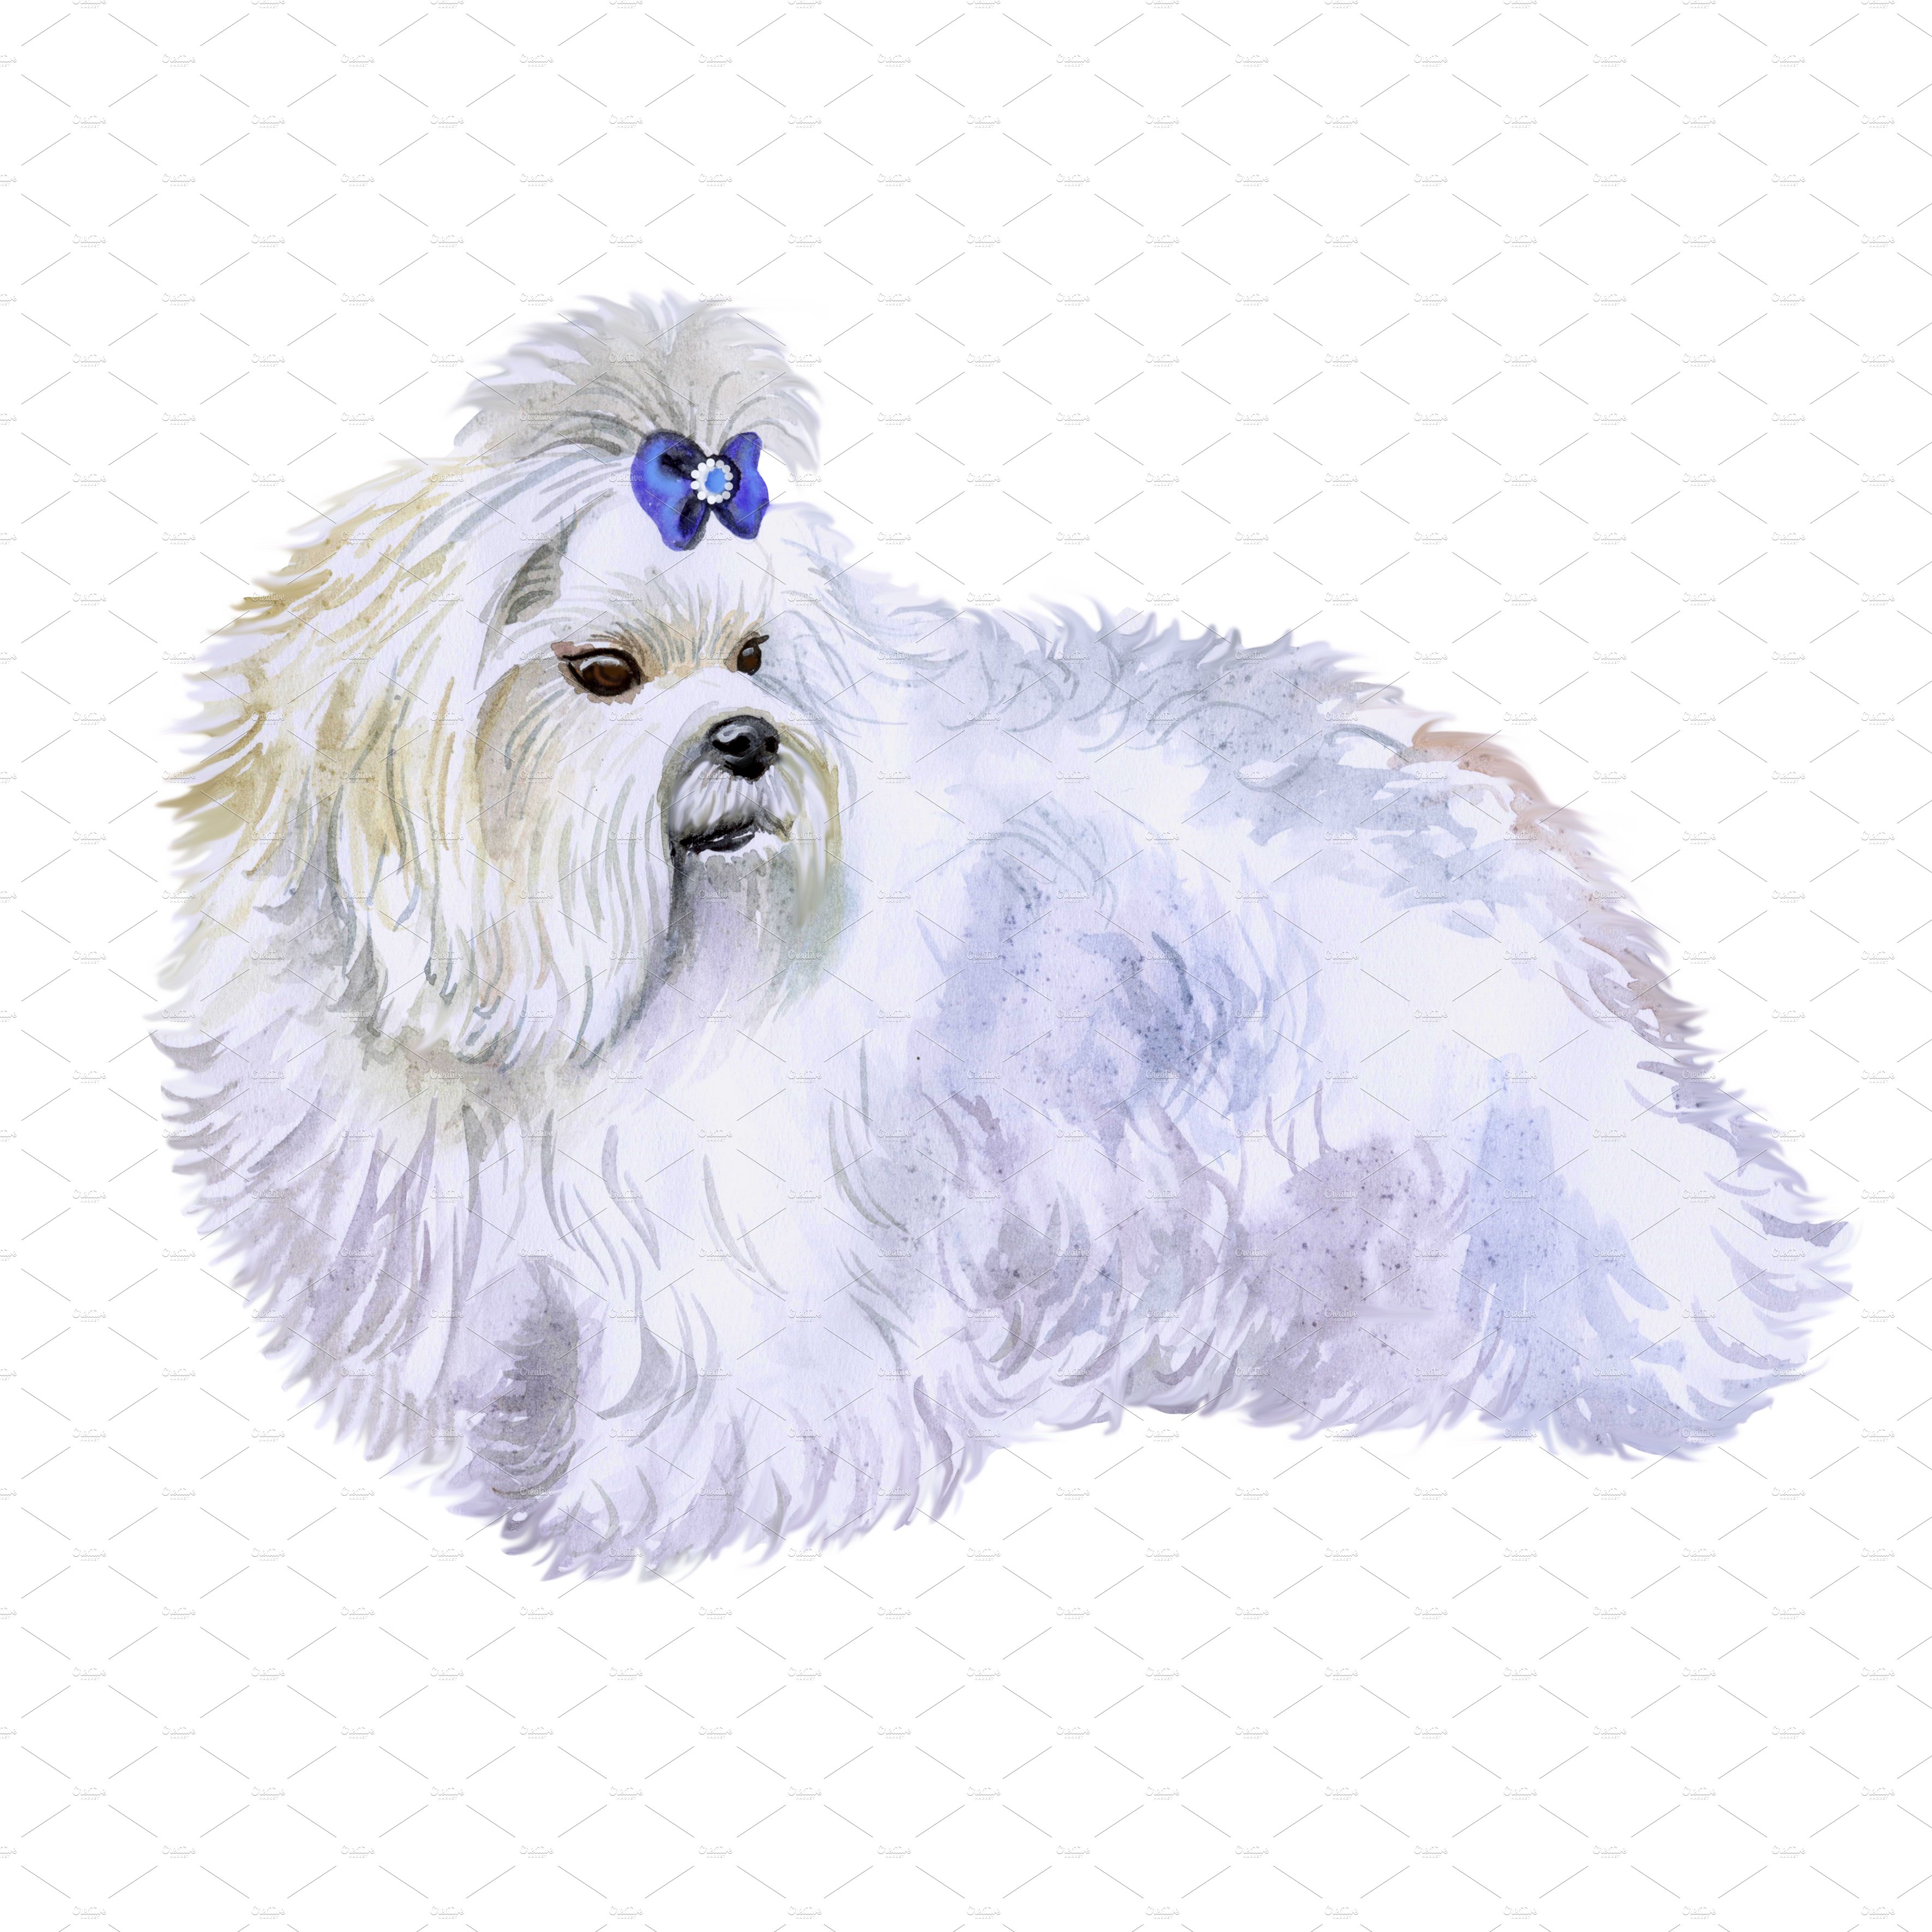 6. maltese dog with background 28229 66